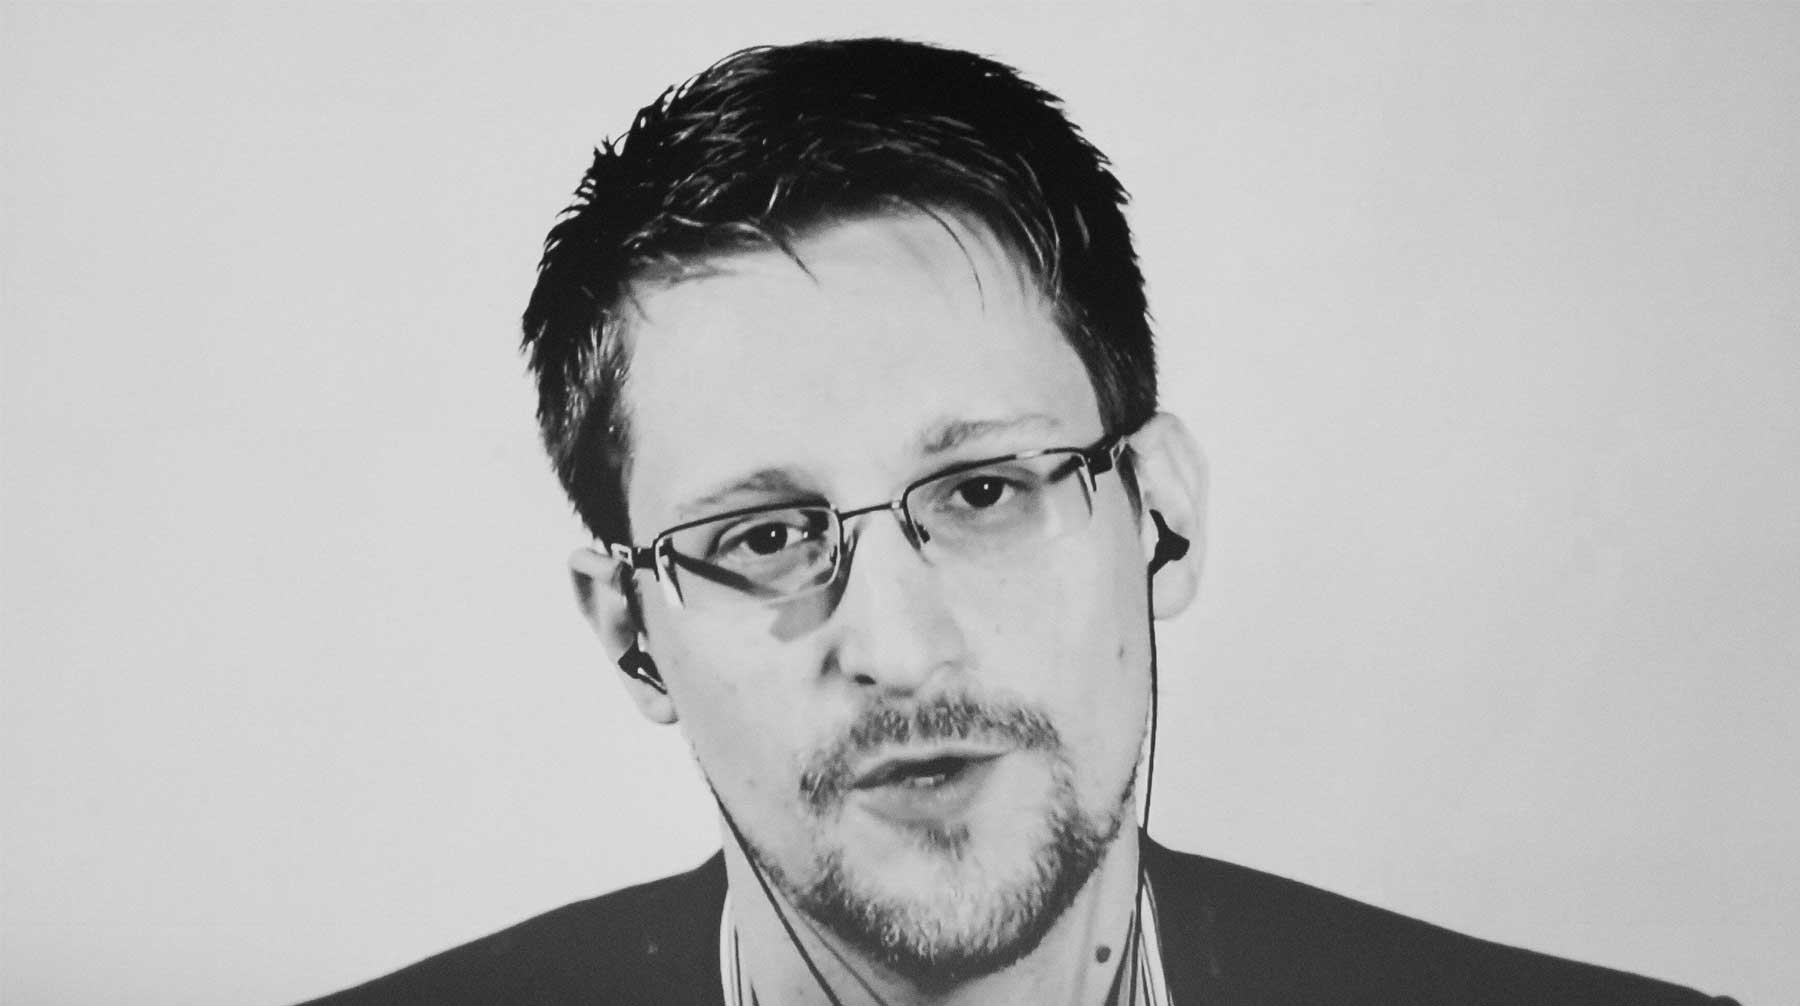 Власти США предъявили основателю WikiLeaks обвинения в сговоре с целью компьютерного взлома Эдвард Сноуден